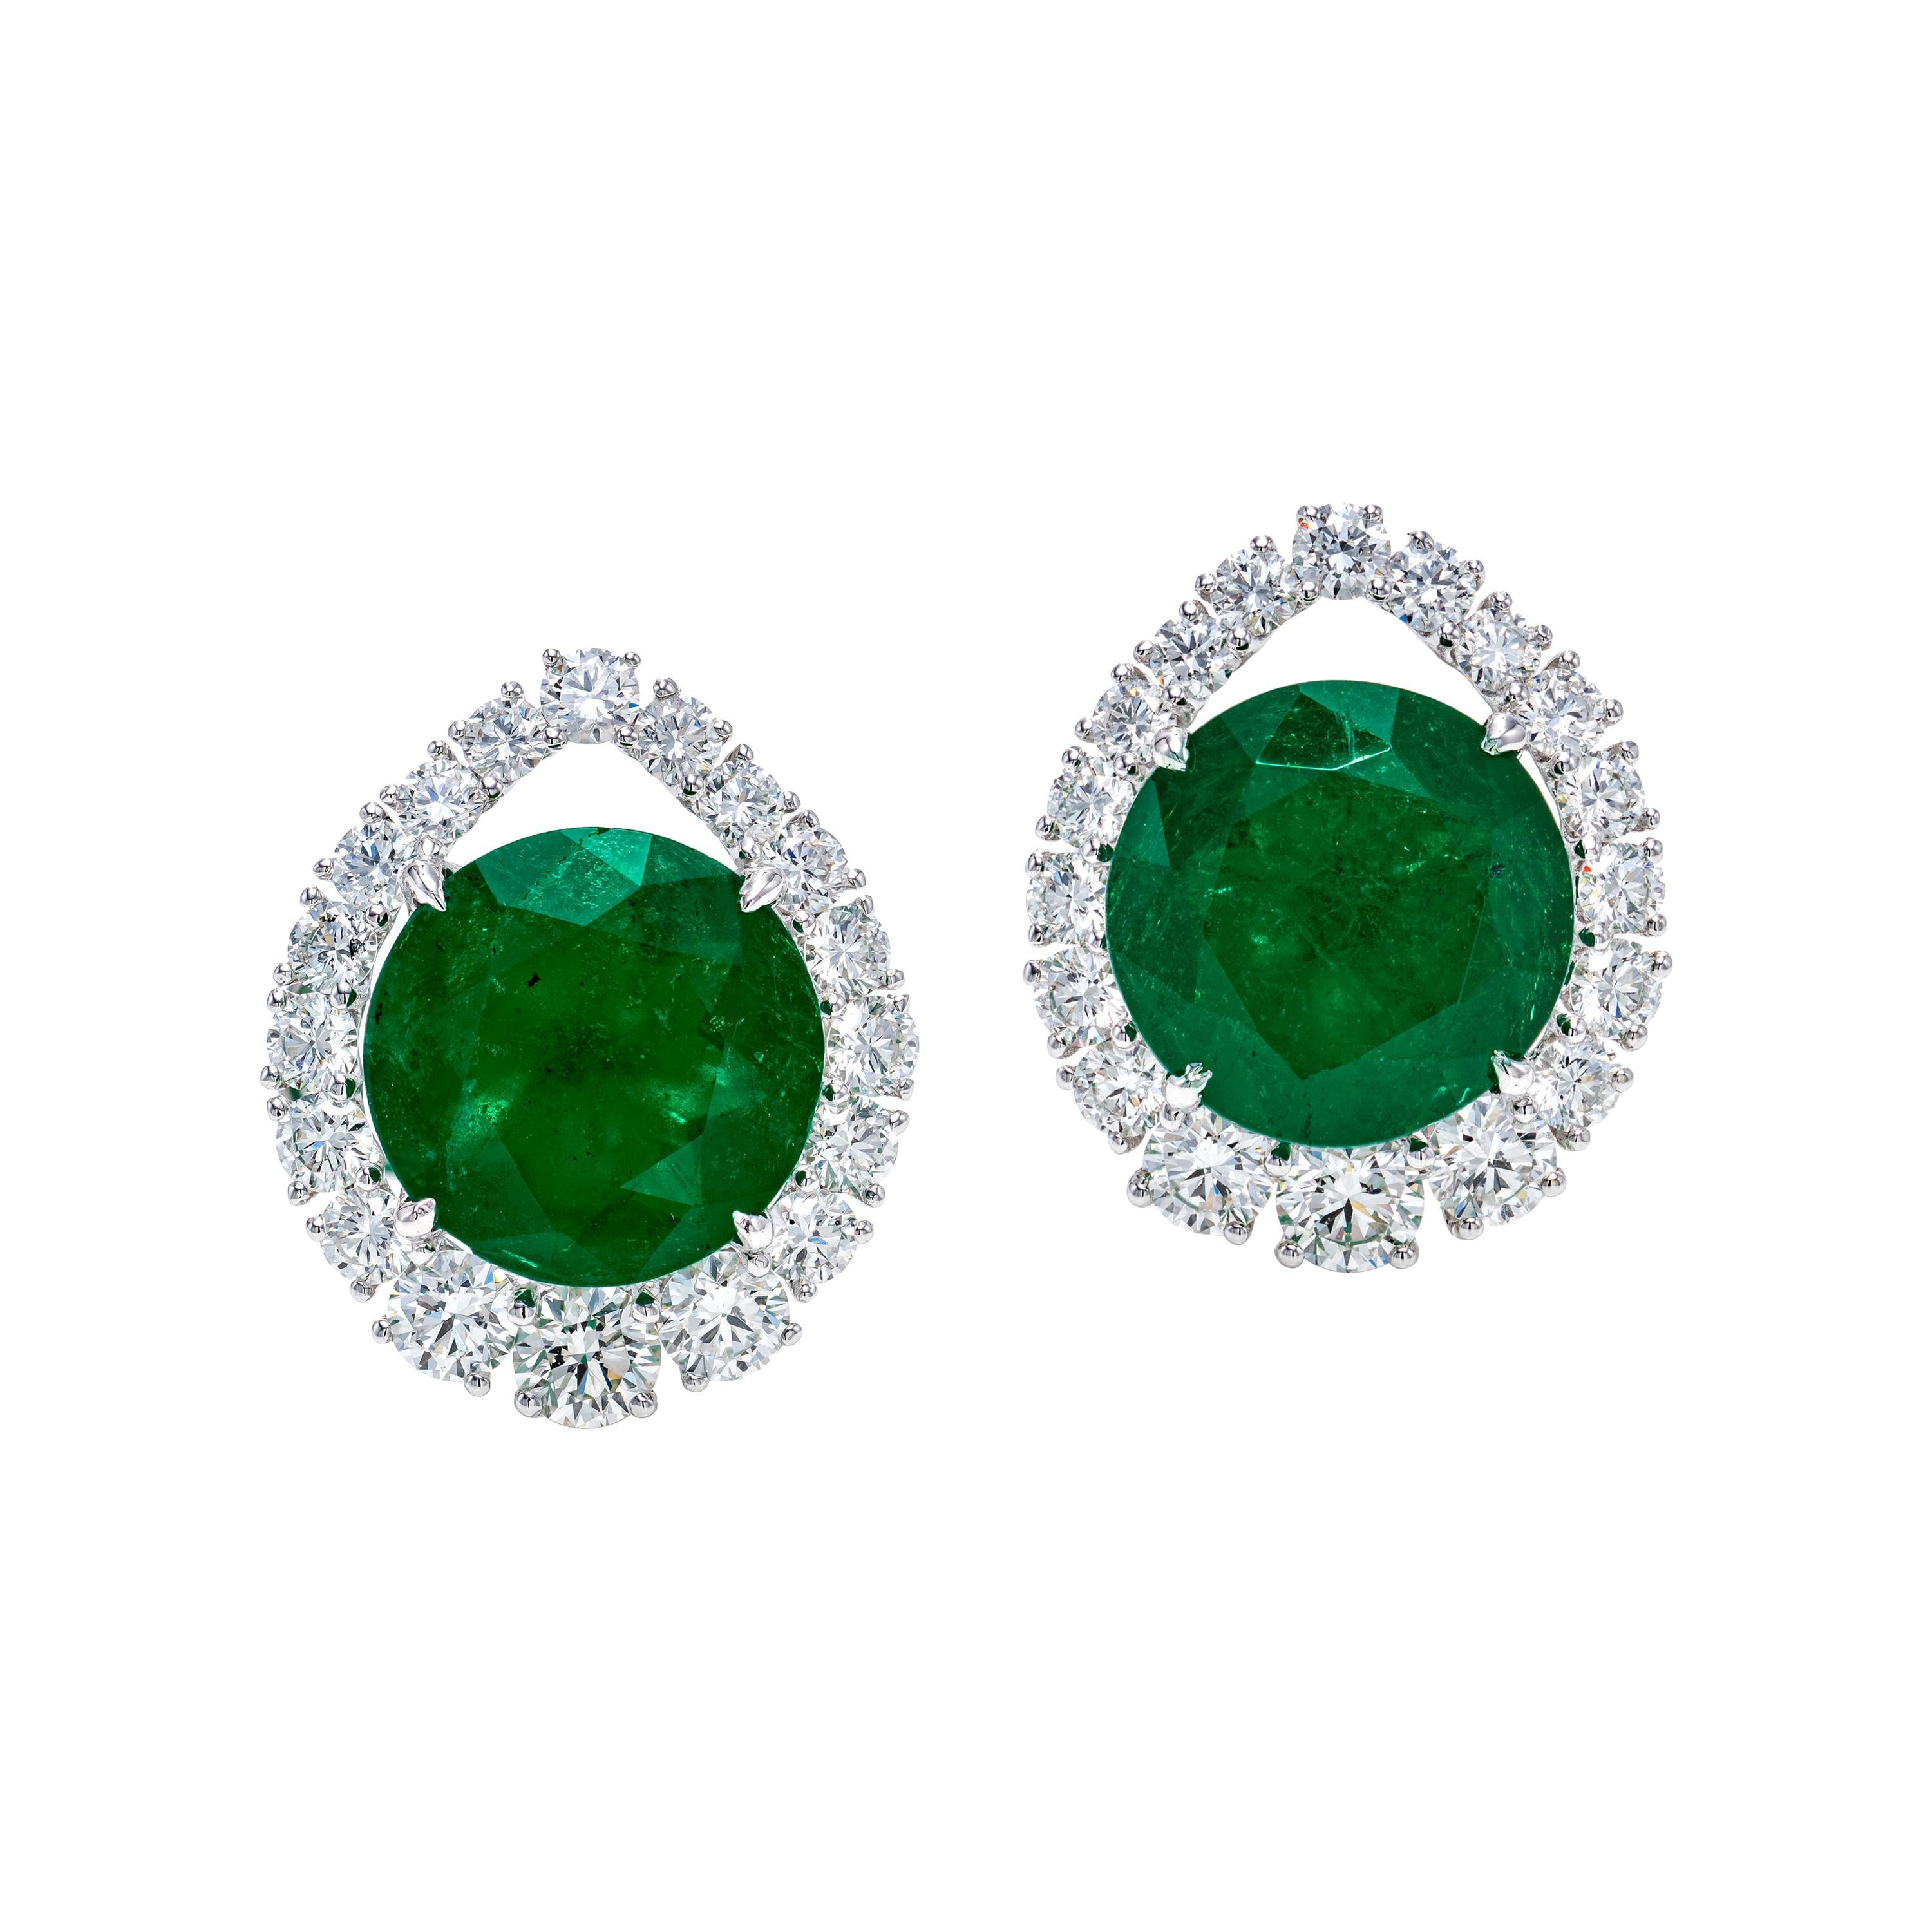 Gubelin Certified 10.59 Carat Round Colombian Emerald Earrings in 18K Gold For Sale